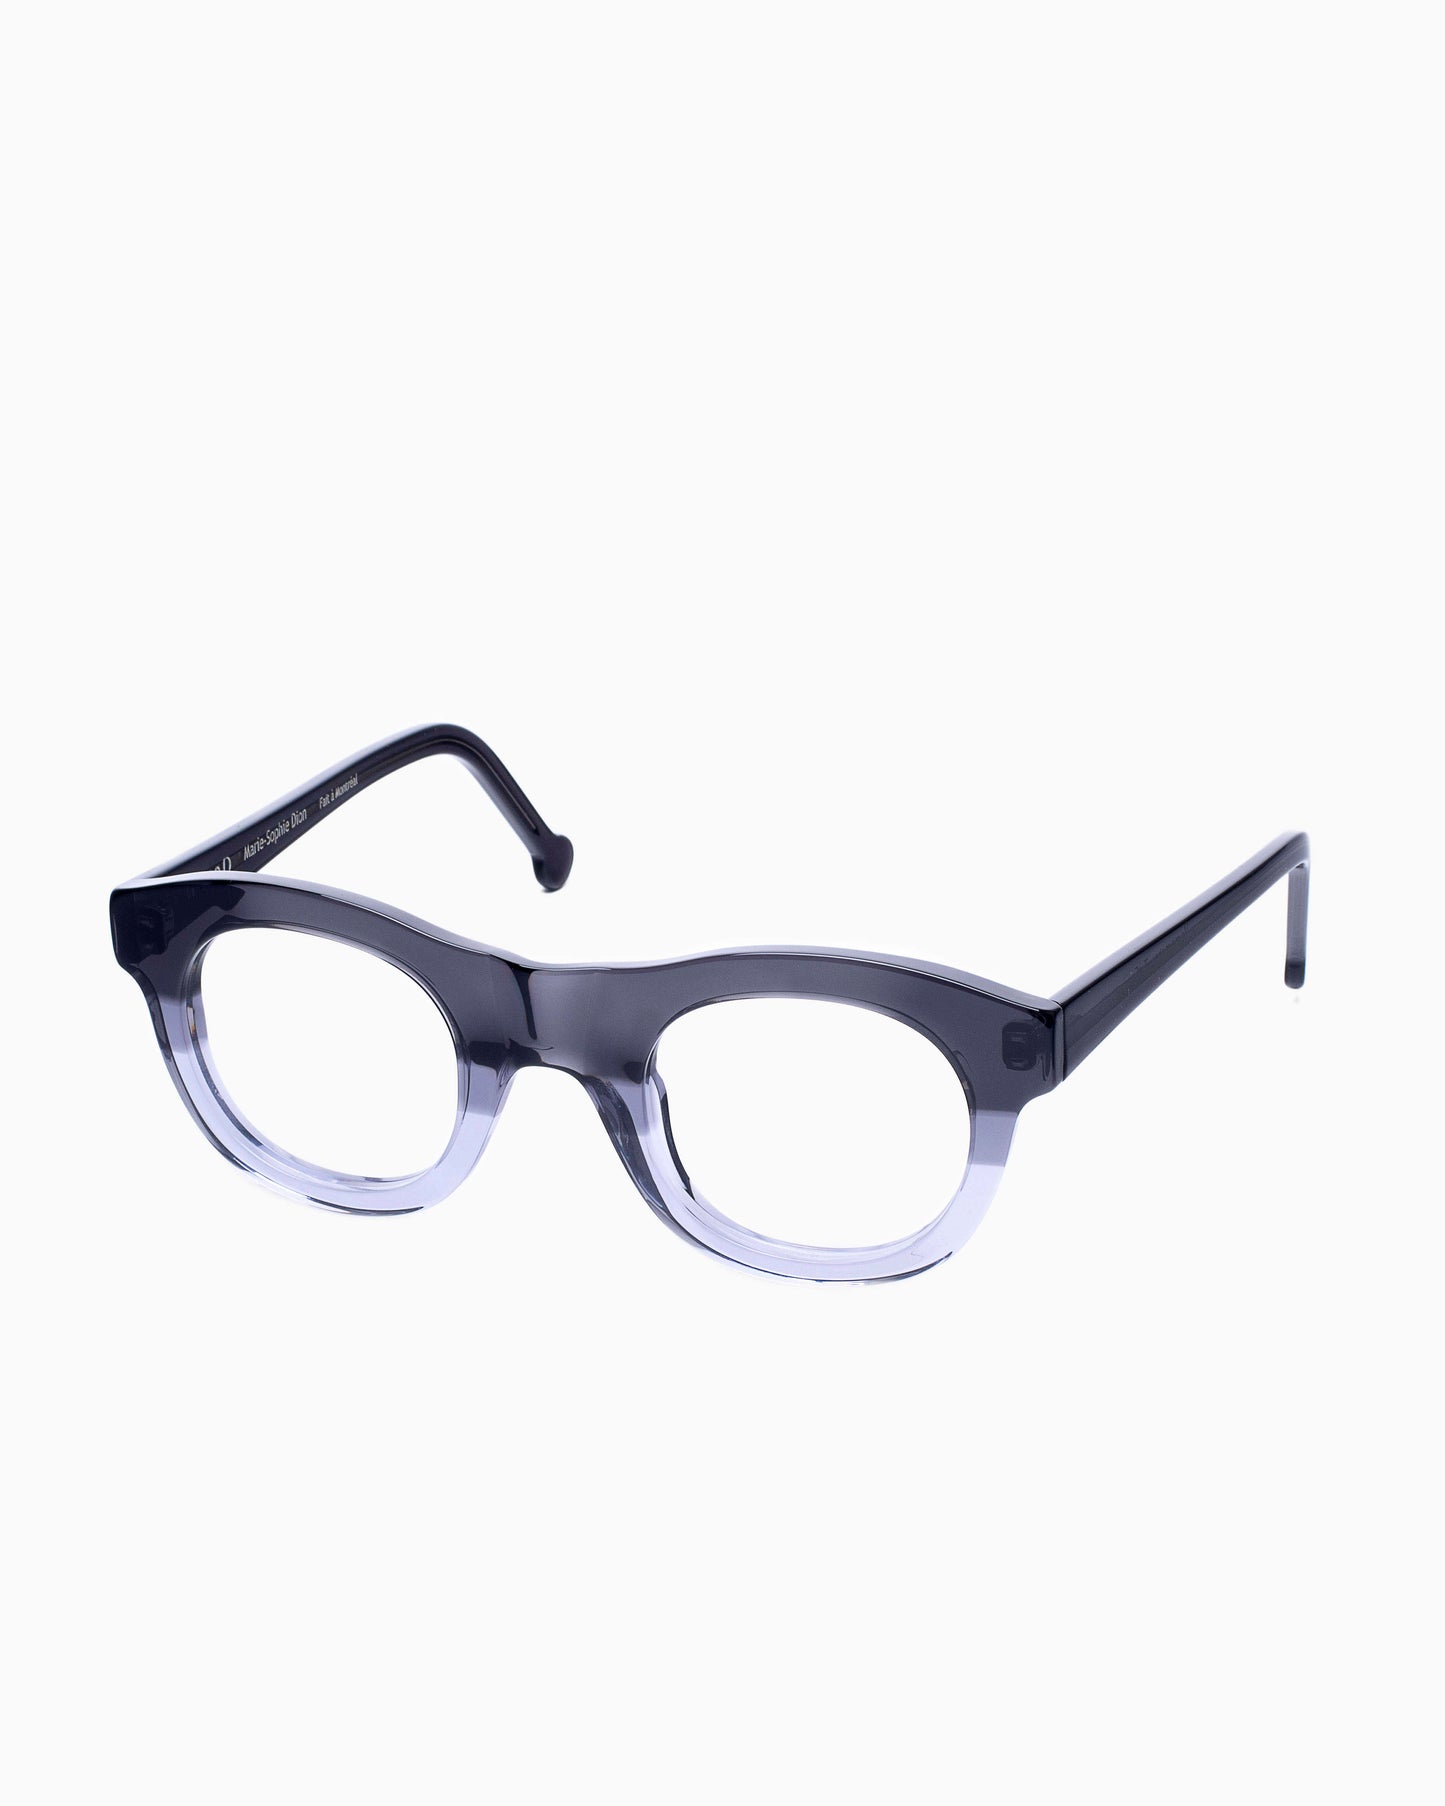 Marie-Sophie Dion - Yamamoto - TriG | glasses bar